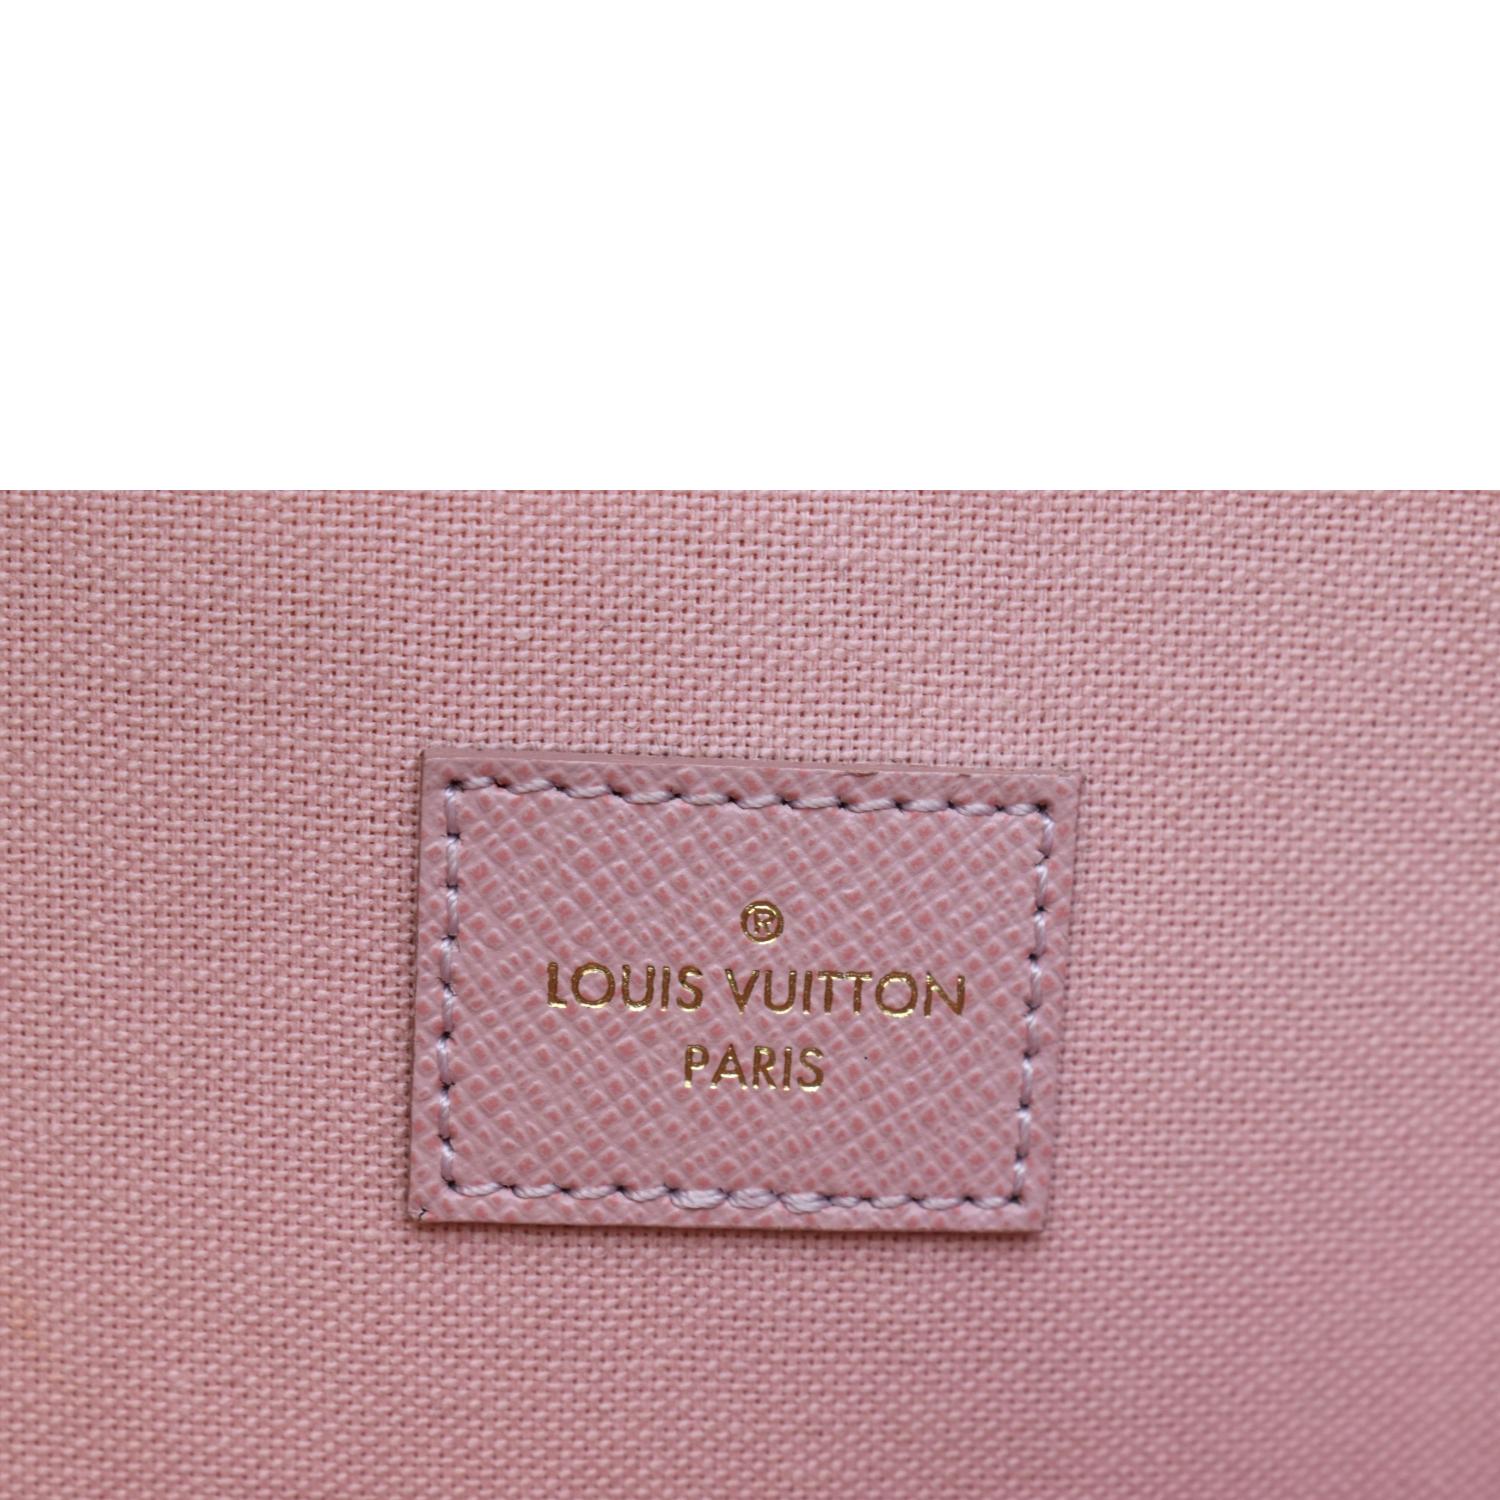 Louis Vuitton Damier Azur Pochette Felicie – Marichelle's Empire